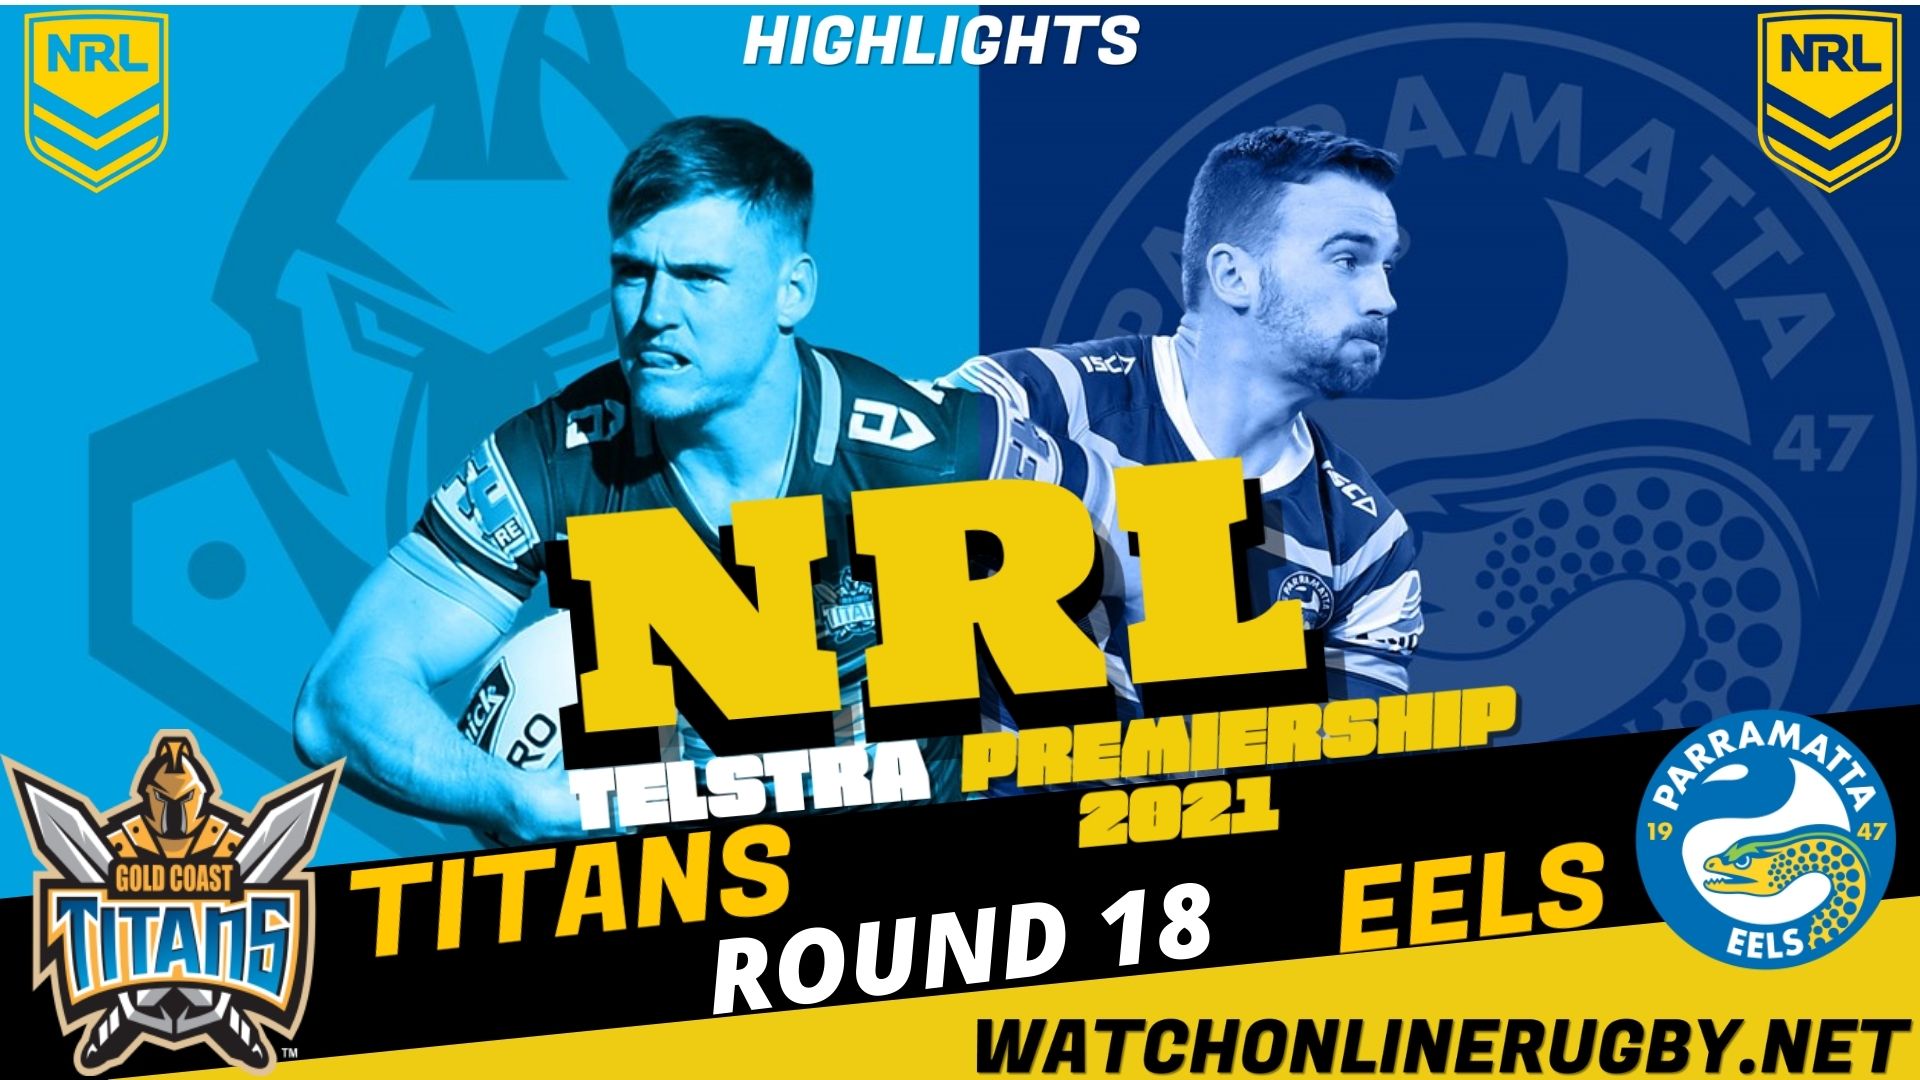 Titans Vs Eels Highlights RD 18 NRL Rugby